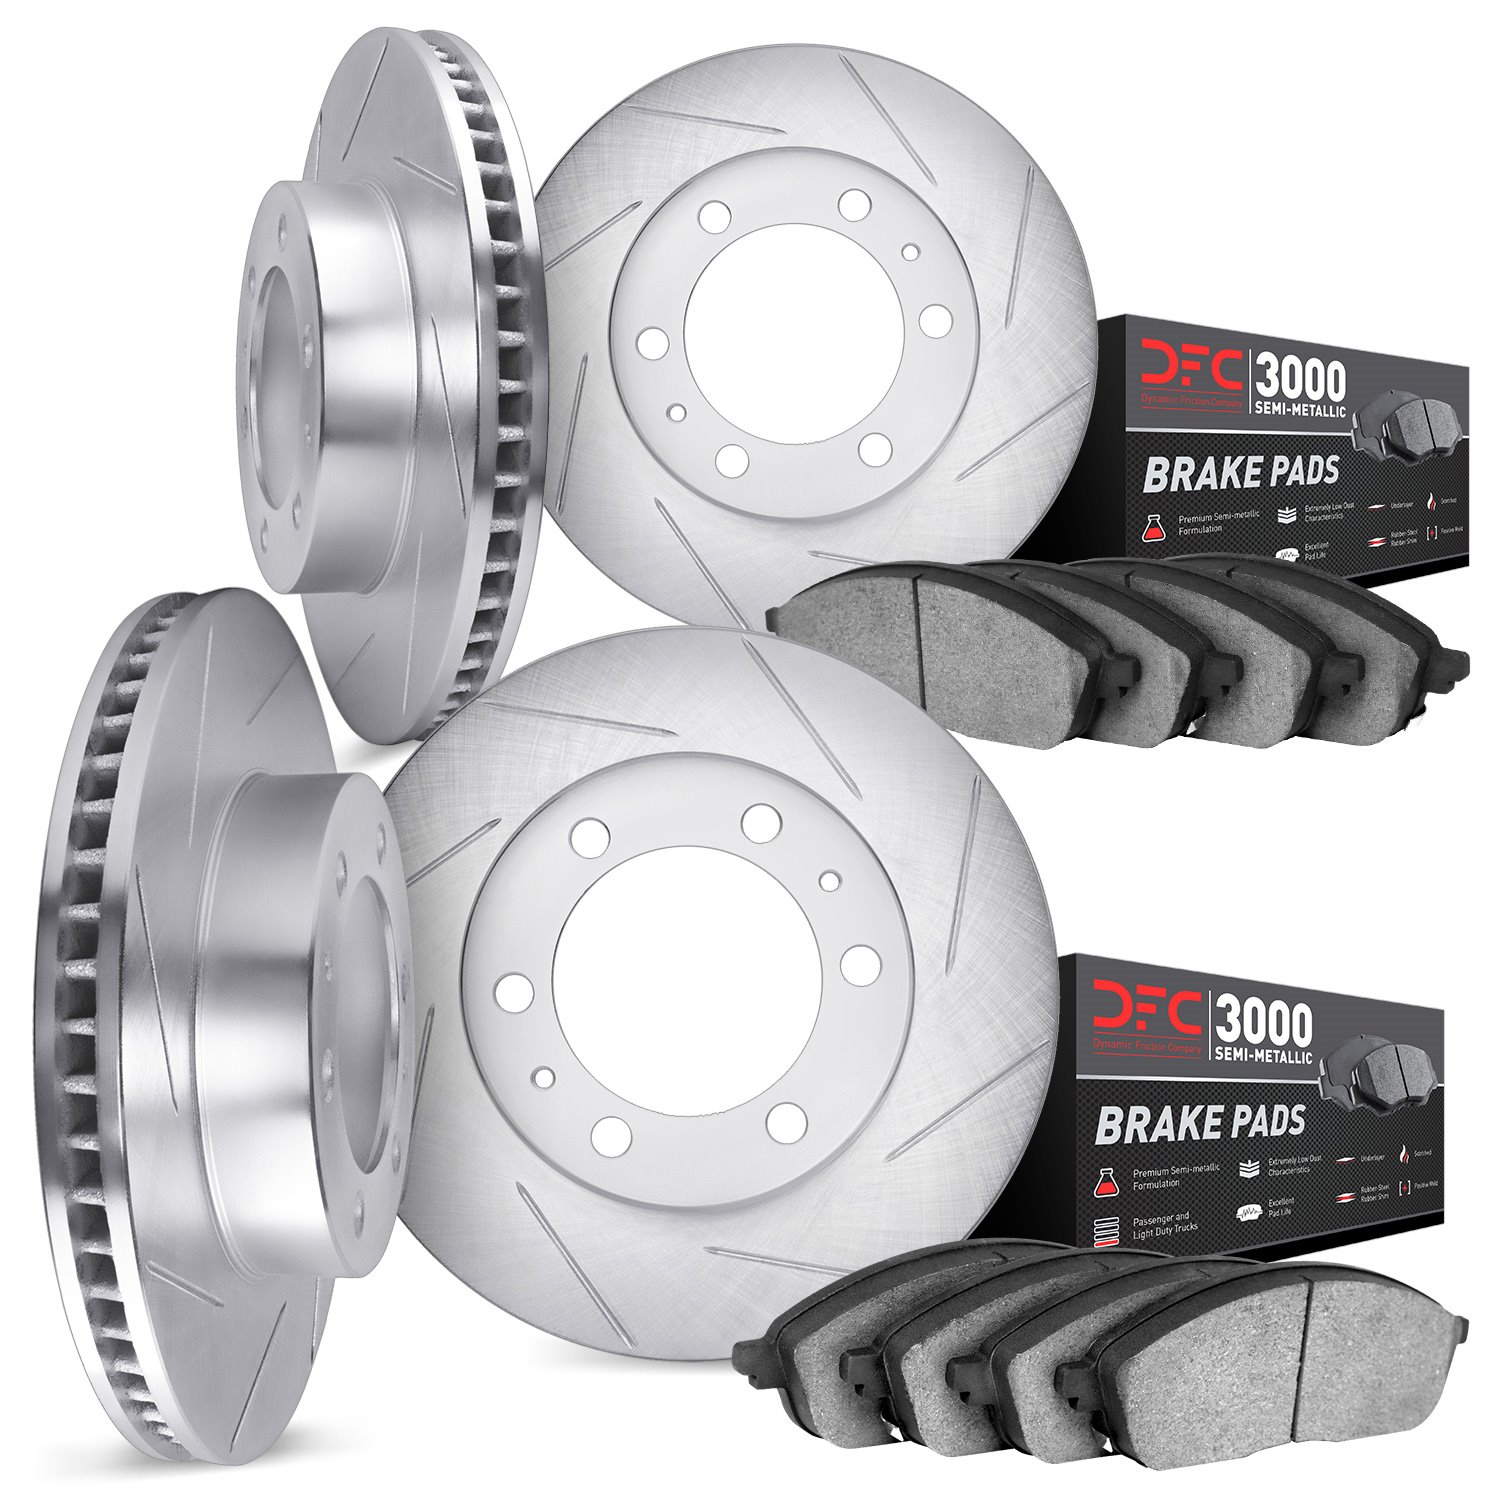 5114-92003 Slotted Brake Rotors with 3000-Series Semi-Metallic Brake Pads Kit & Hardware [Silver], 2008-2014 Mitsubishi, Positio